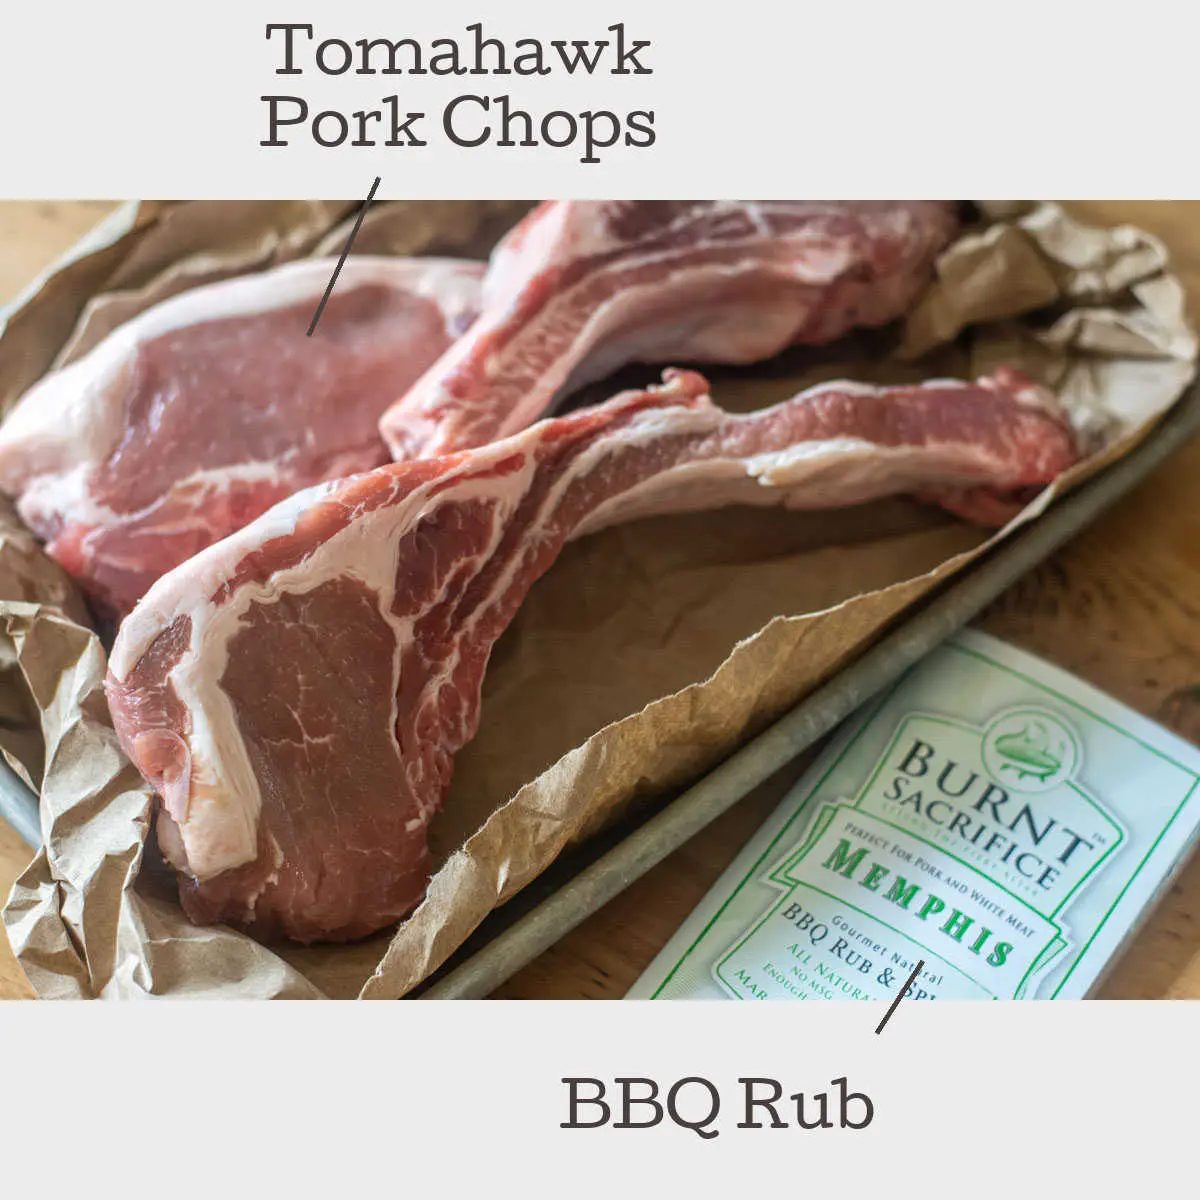 smoked pork tomahawk - What is pork tomahawk